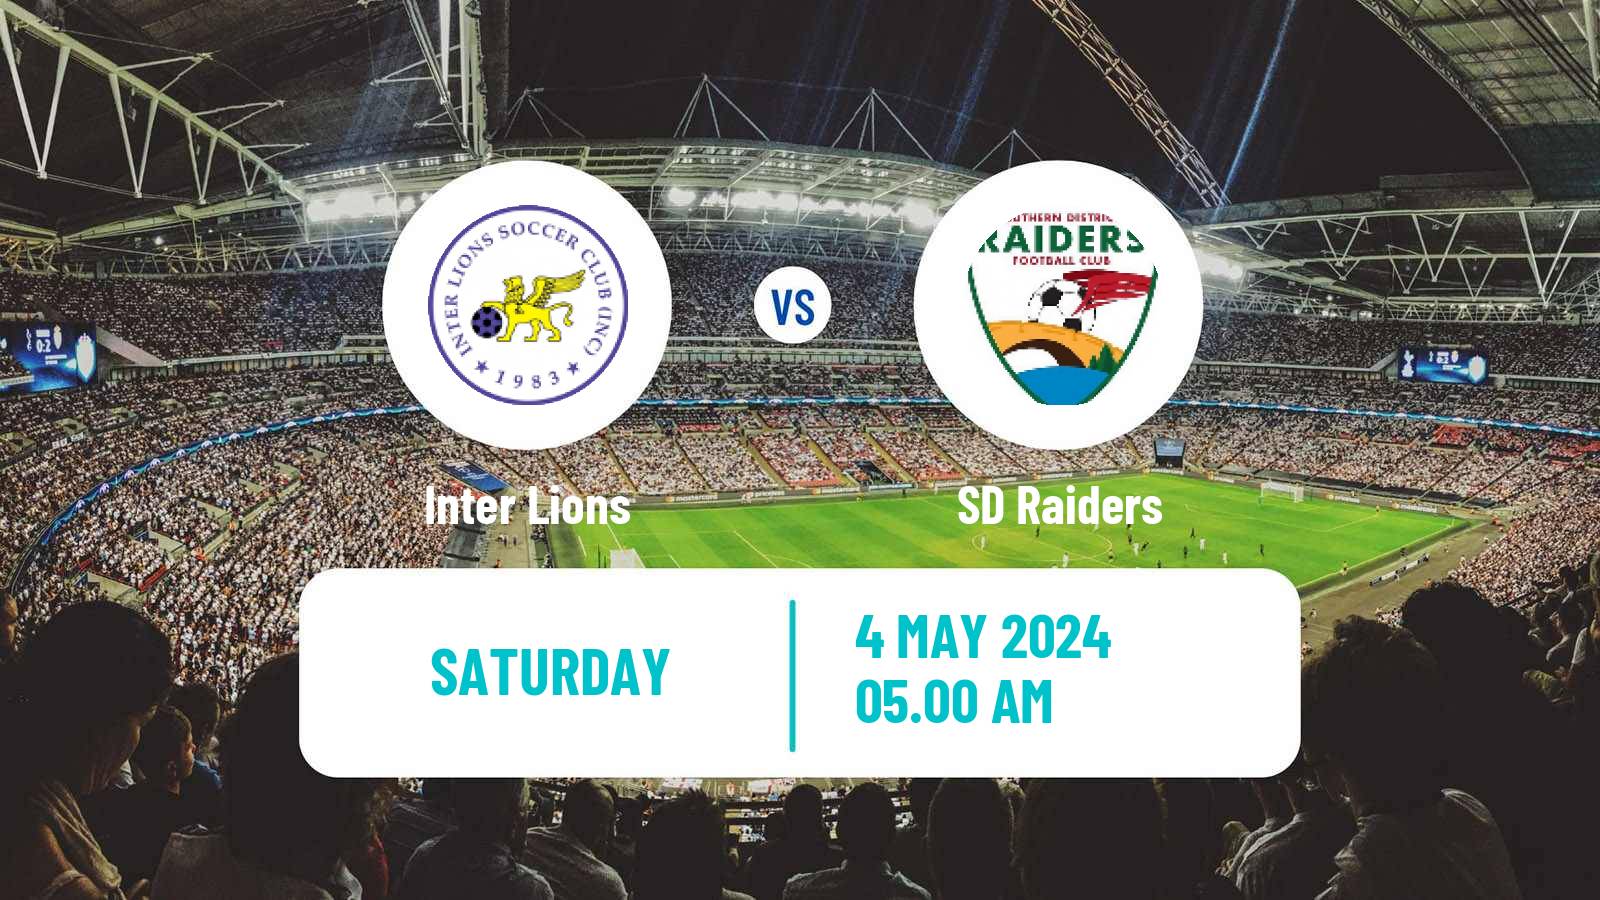 Soccer Australian NSW League One Inter Lions - SD Raiders